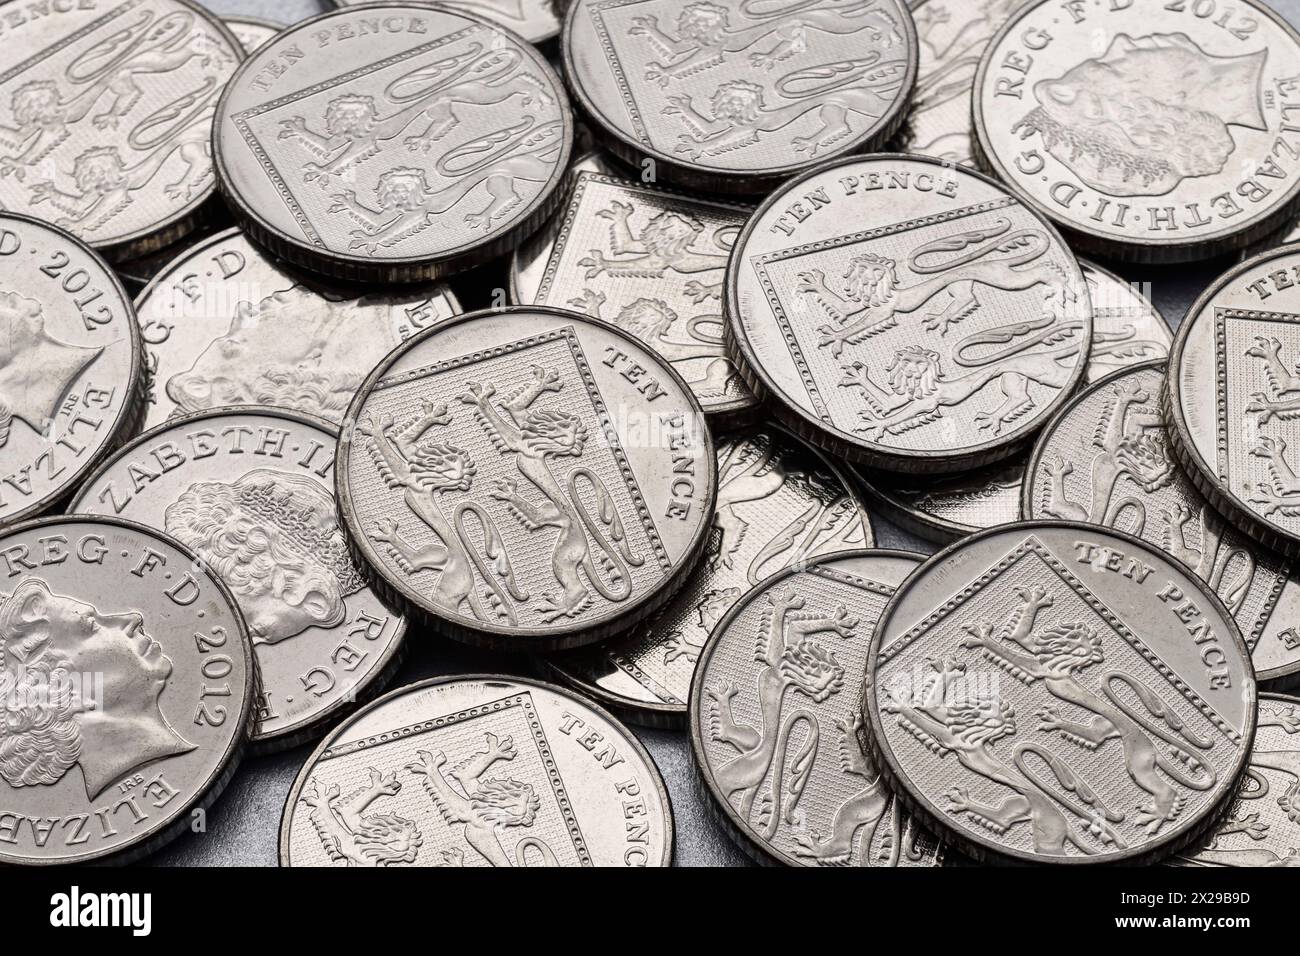 British ten pence coins Stock Photo